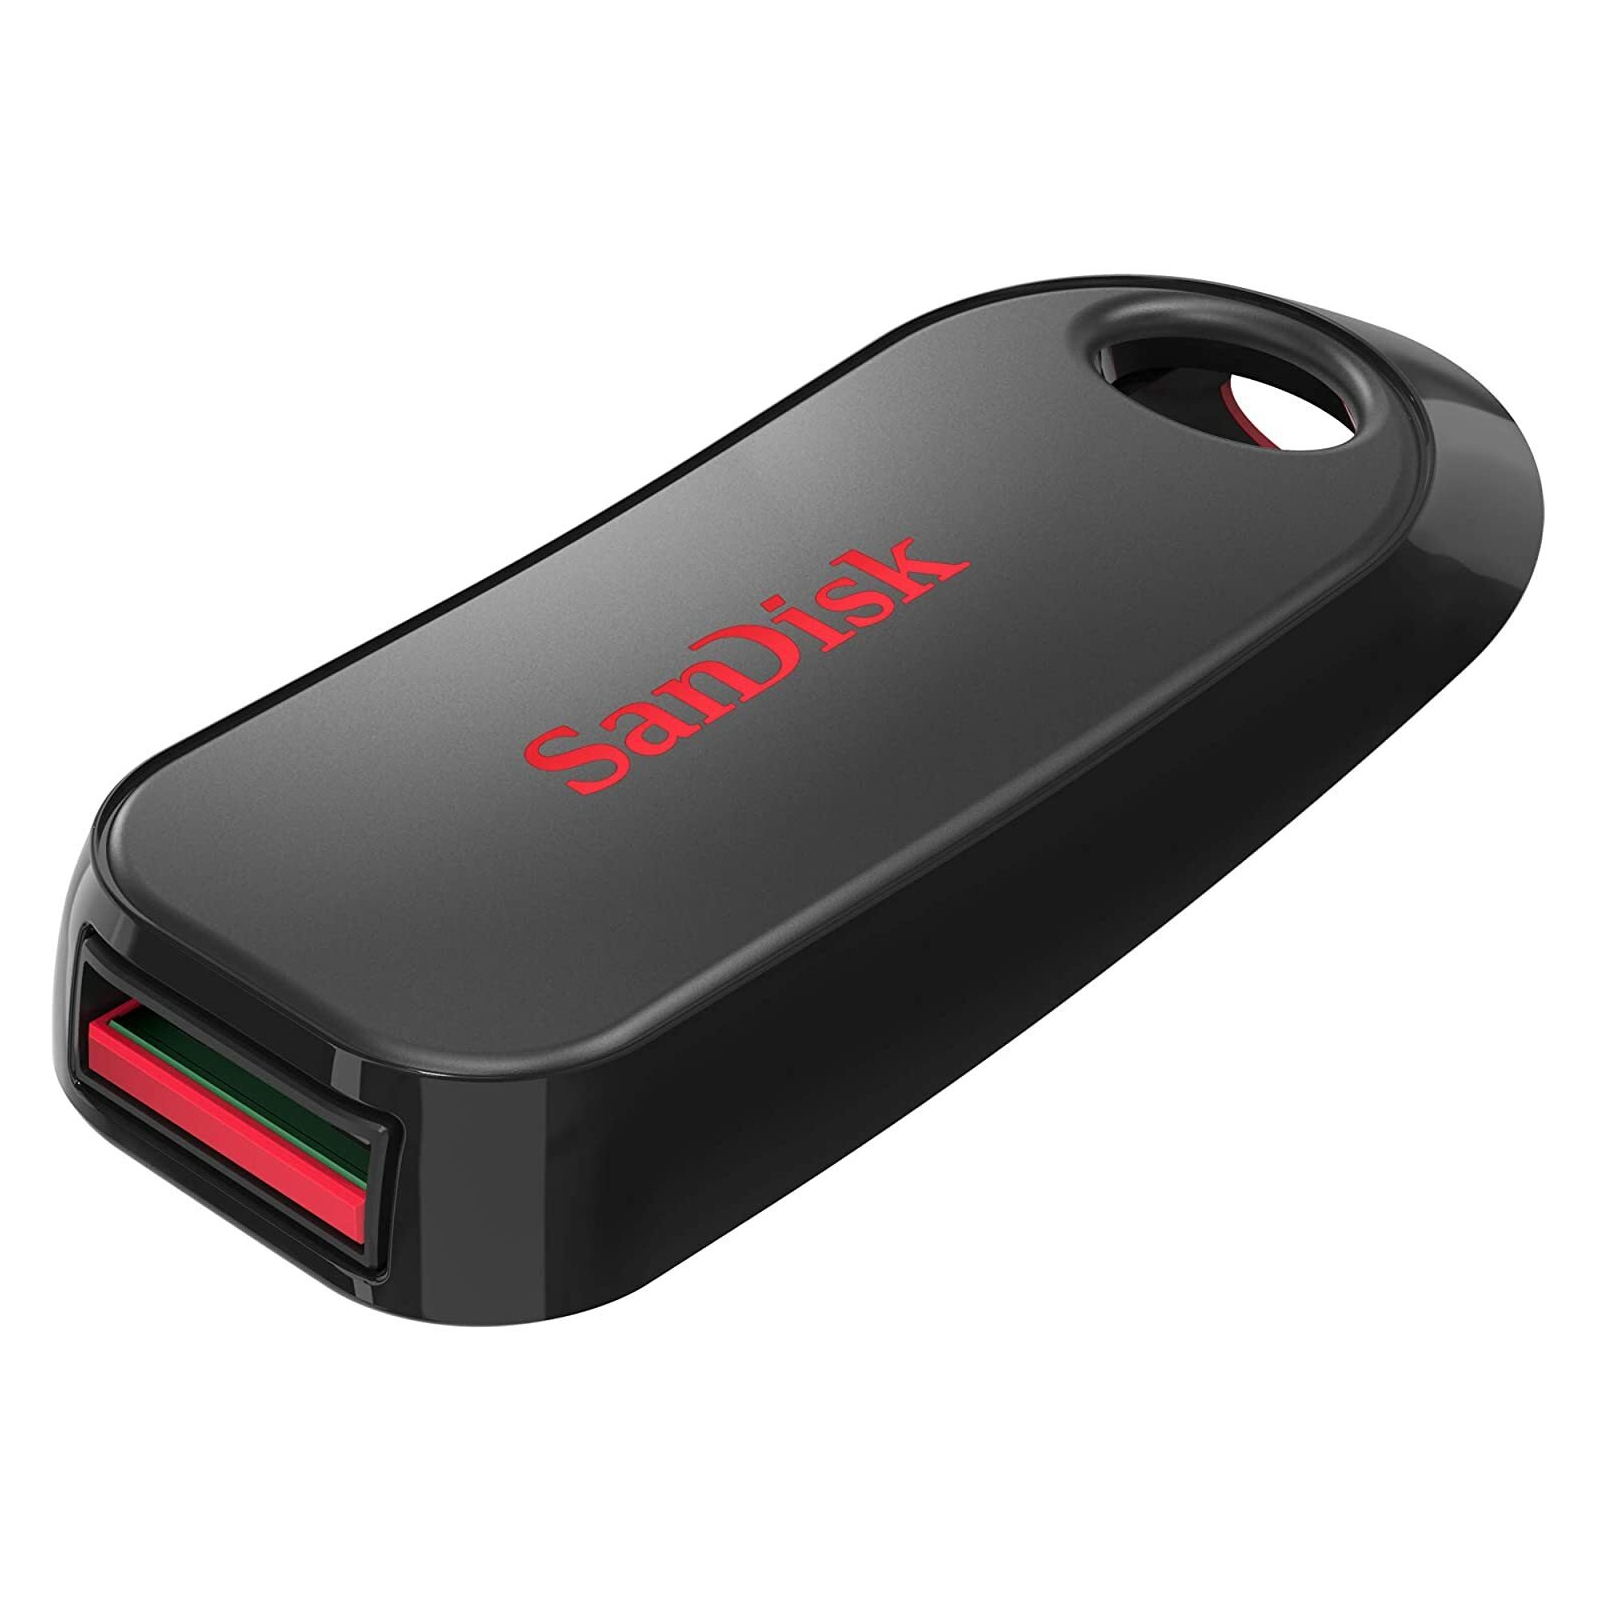 USB флеш накопитель SanDisk 64GB Cruzer Snap USB 2.0 (SDCZ62-064G-G35) изображение 5